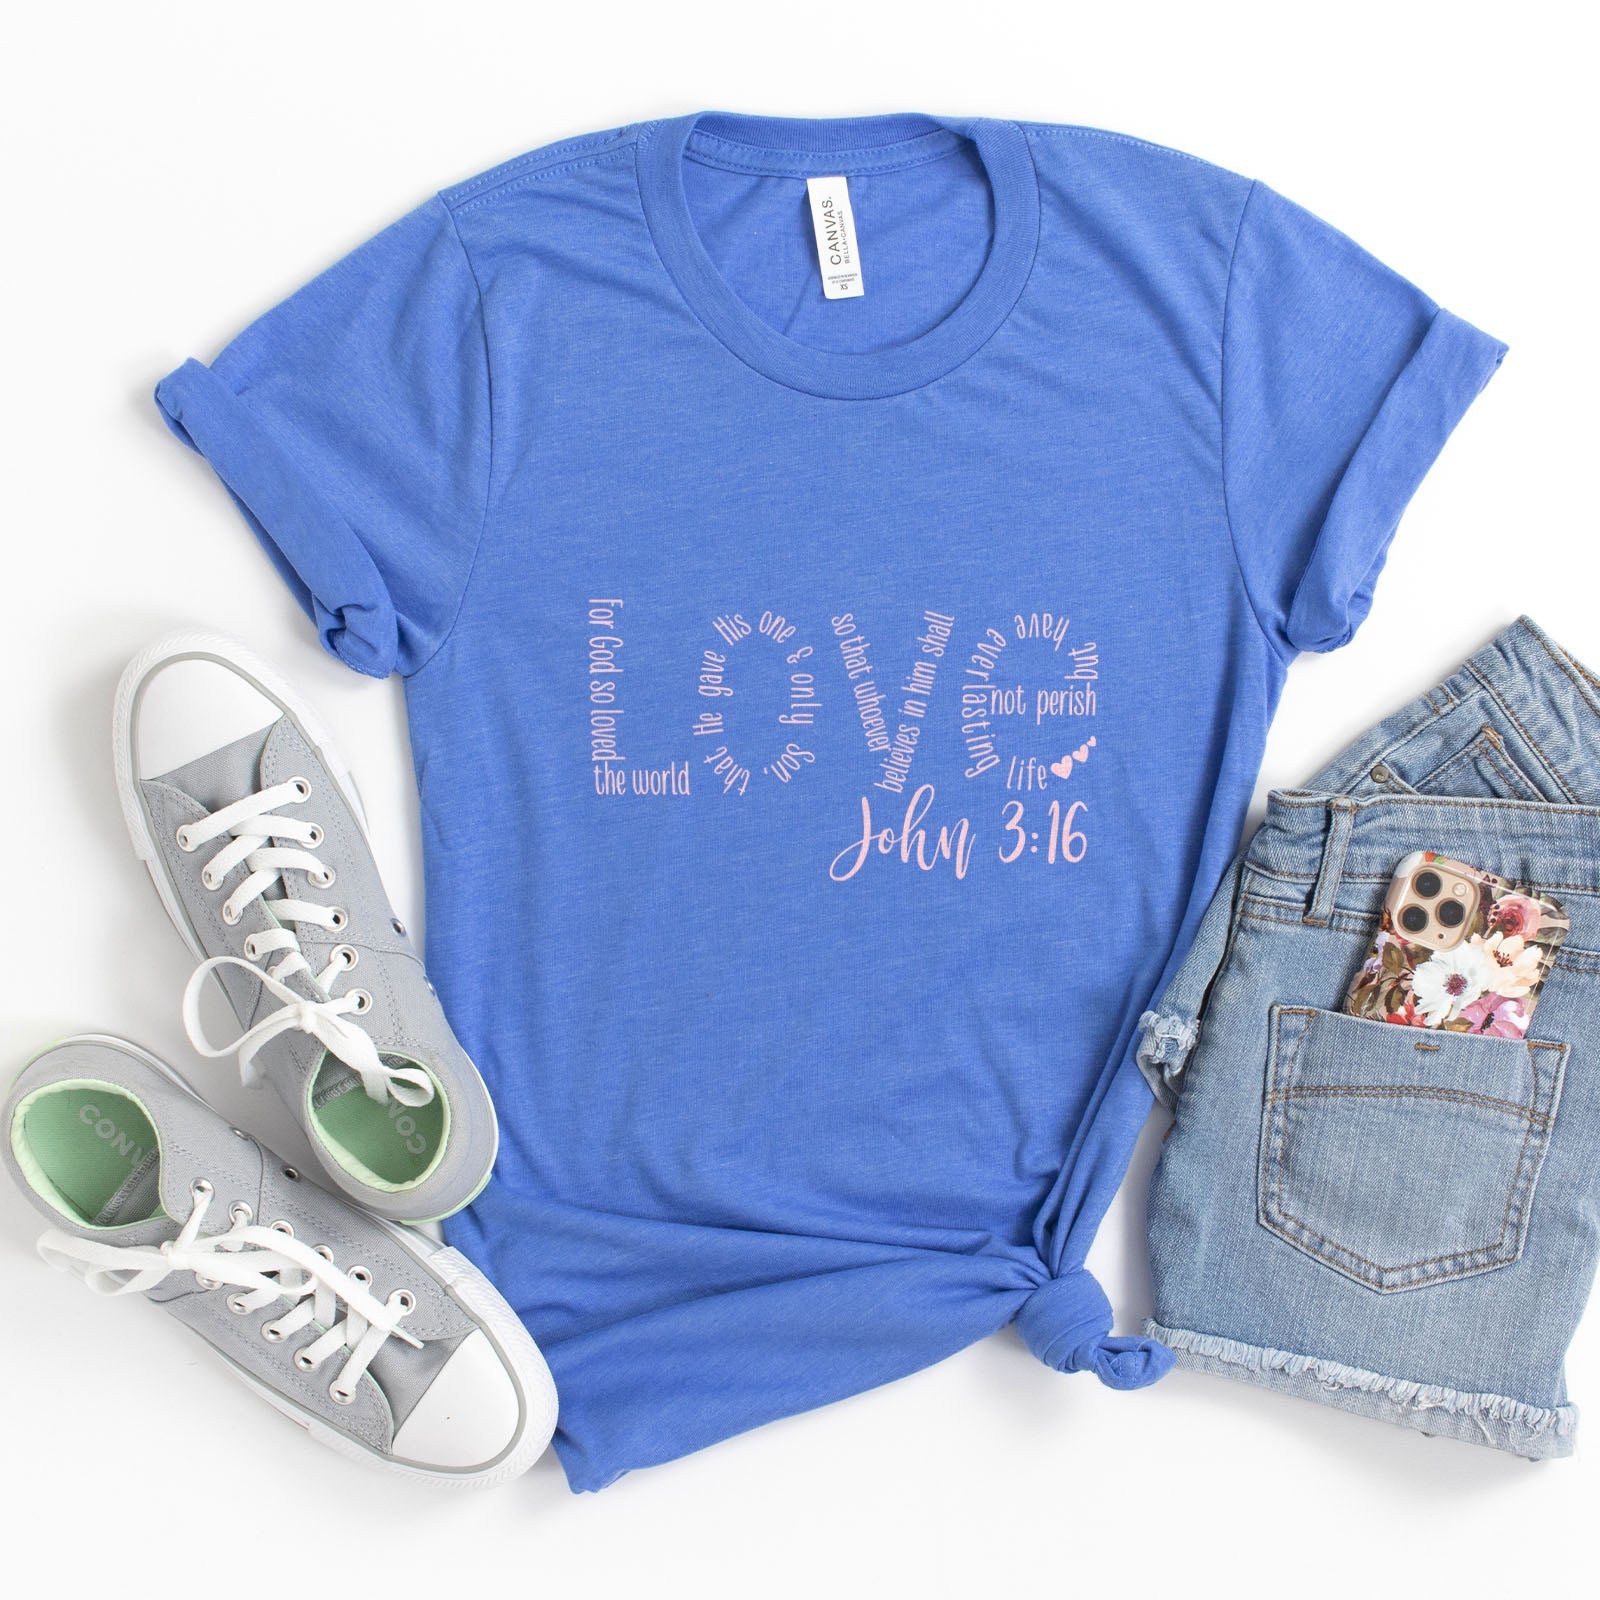 Love John 3:16 Tee Shirts For Women - Christian Shirts for Women - Religious Tee Shirts